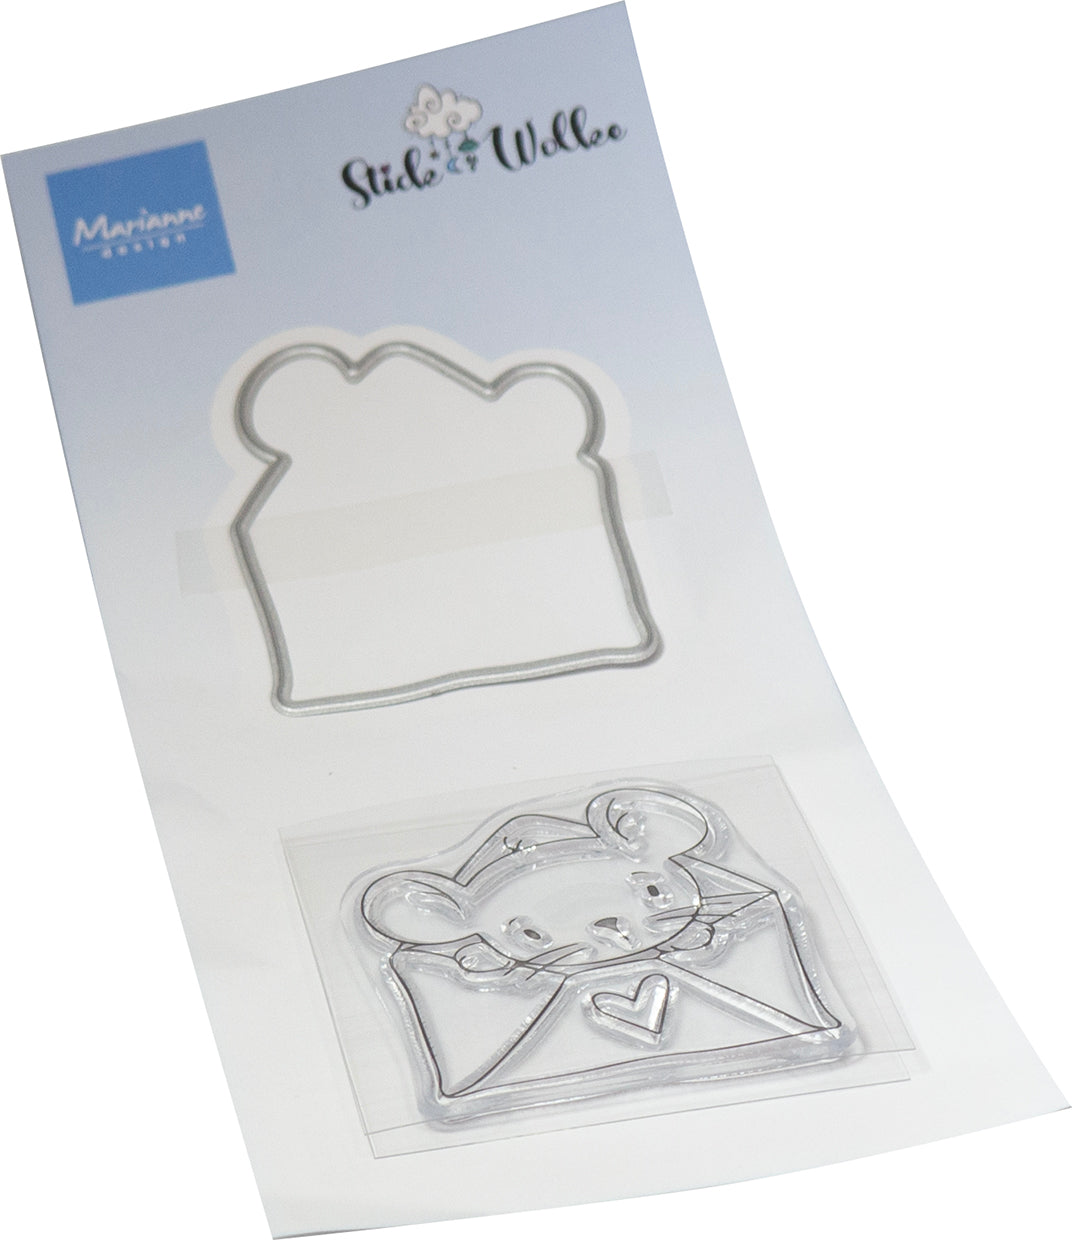 Marianne Design Stamp & Die Set - Hello Mouse